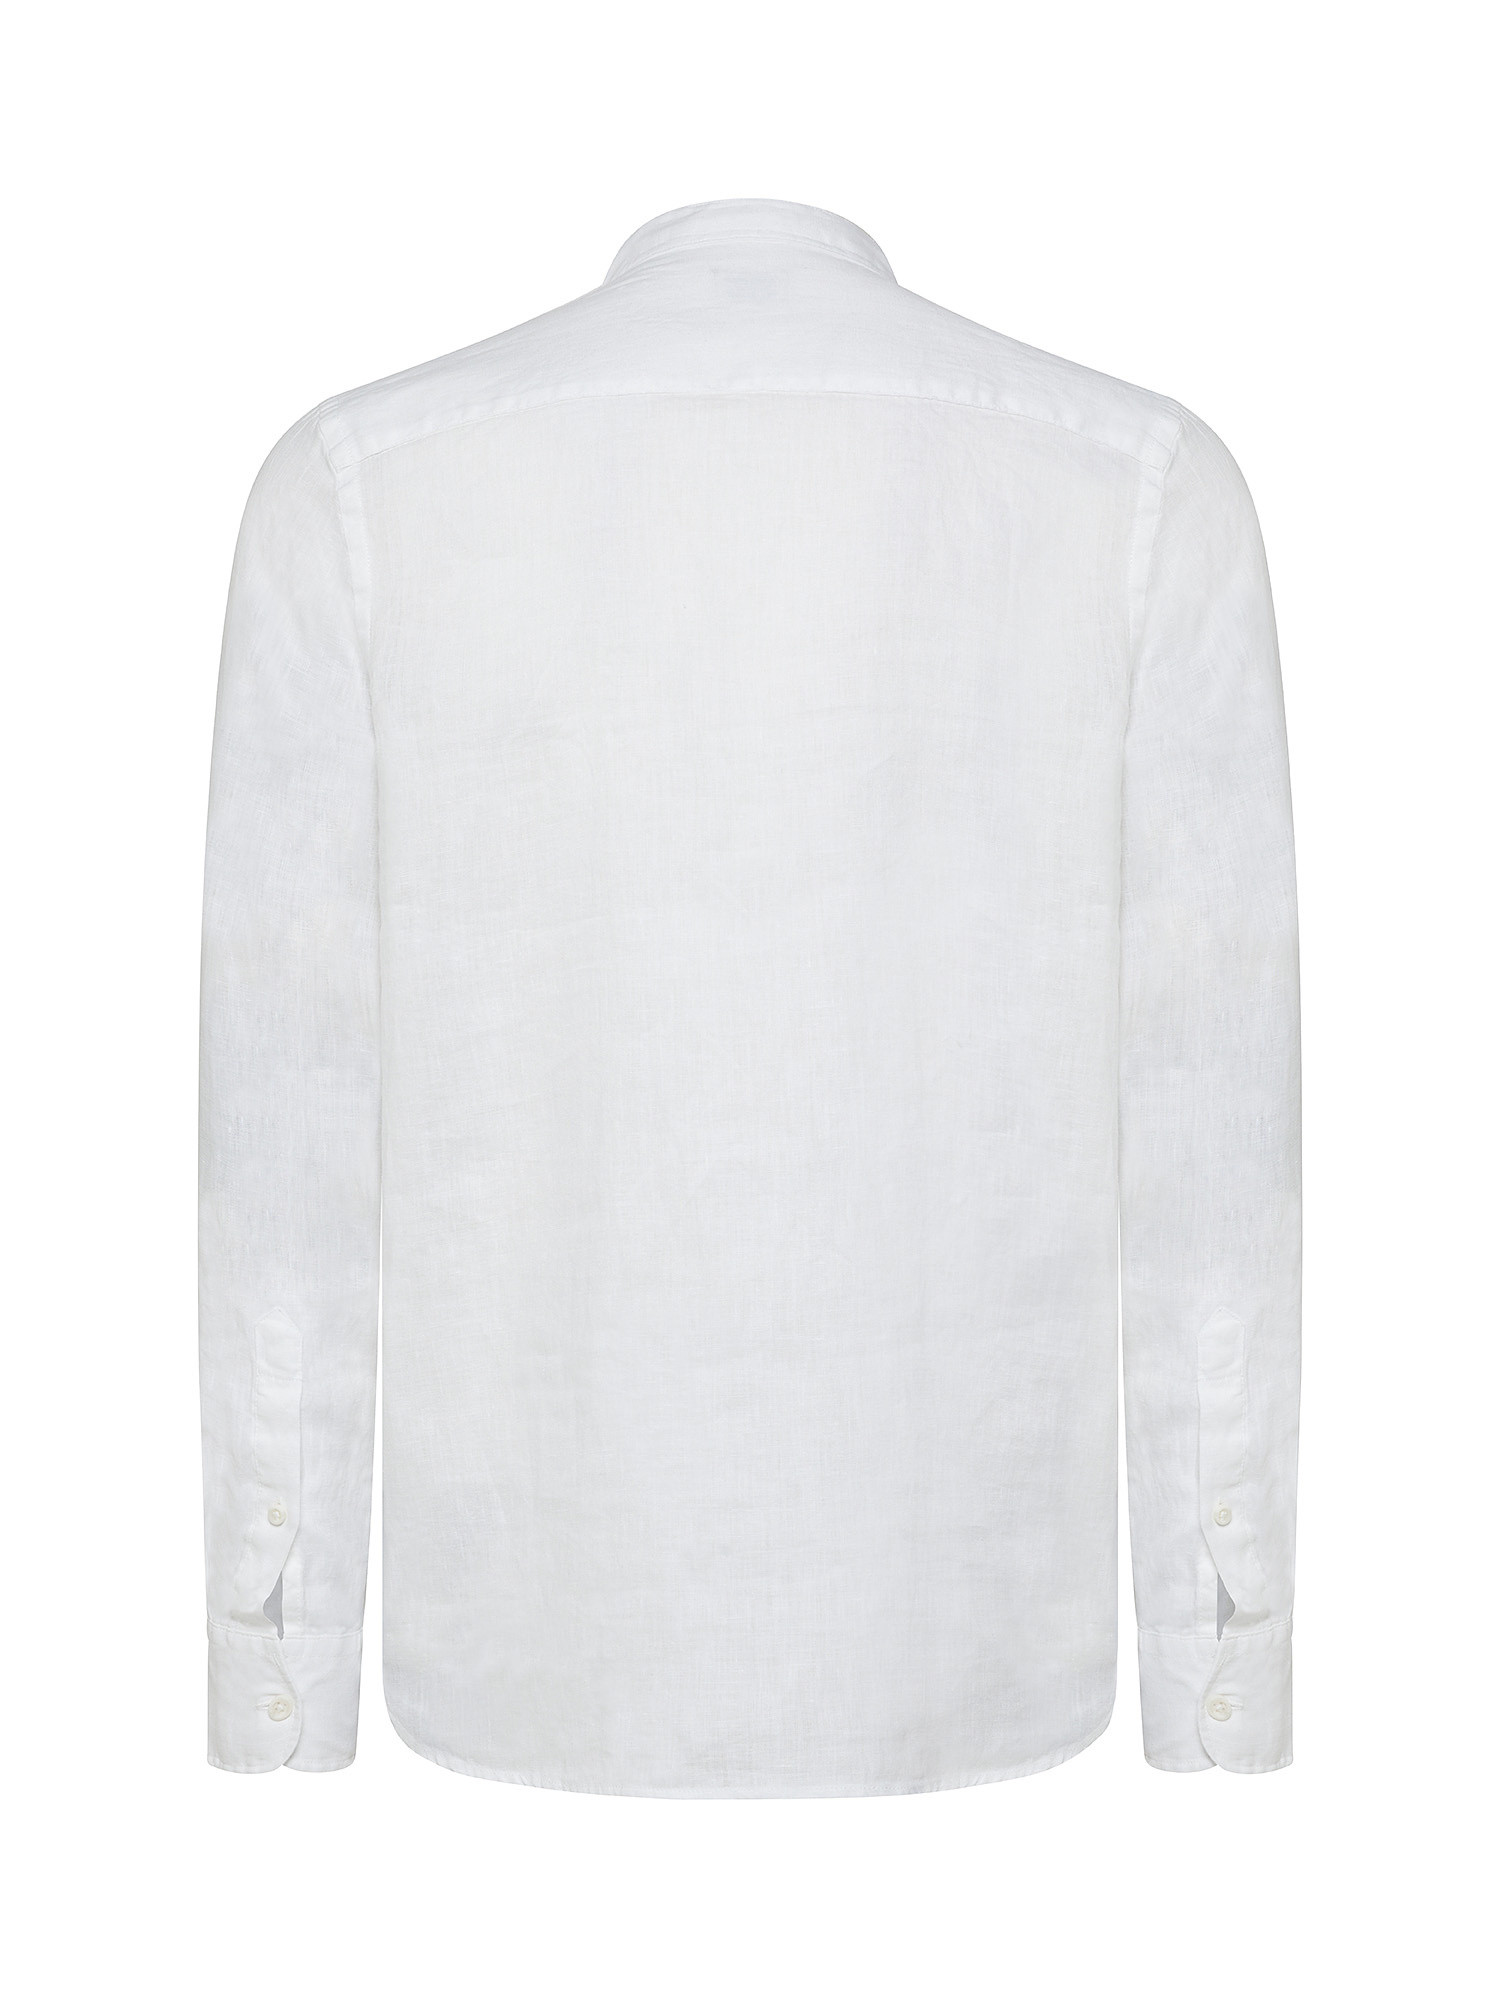 JCT - Pure linen Korean shirt, White, large image number 1